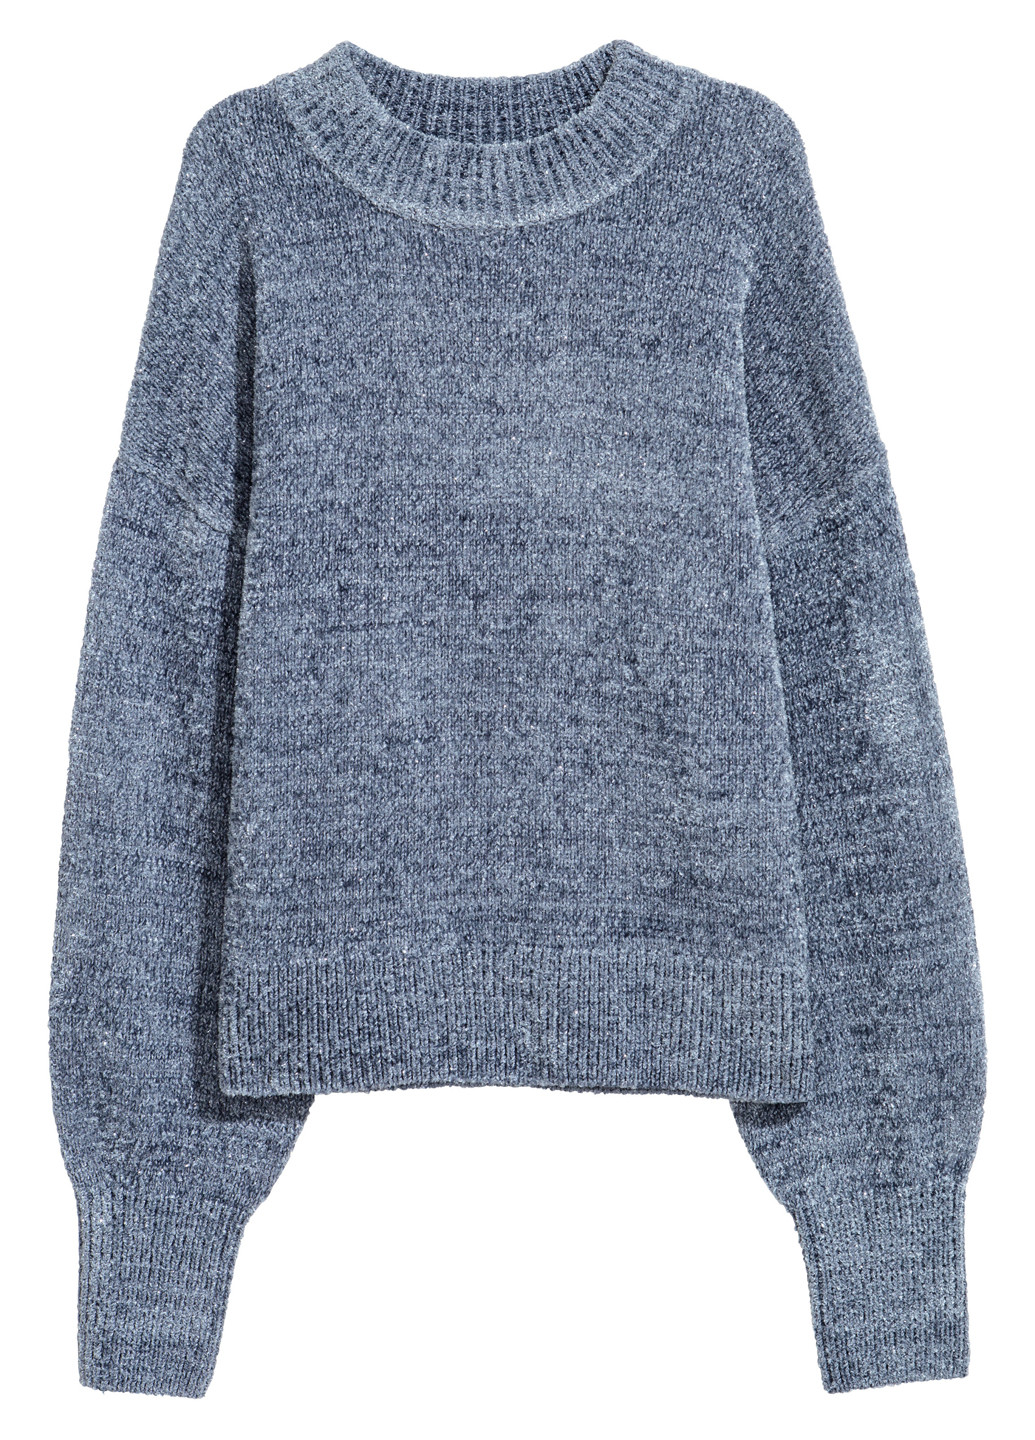 Серо-синий демисезонный свитер джемпер H&M